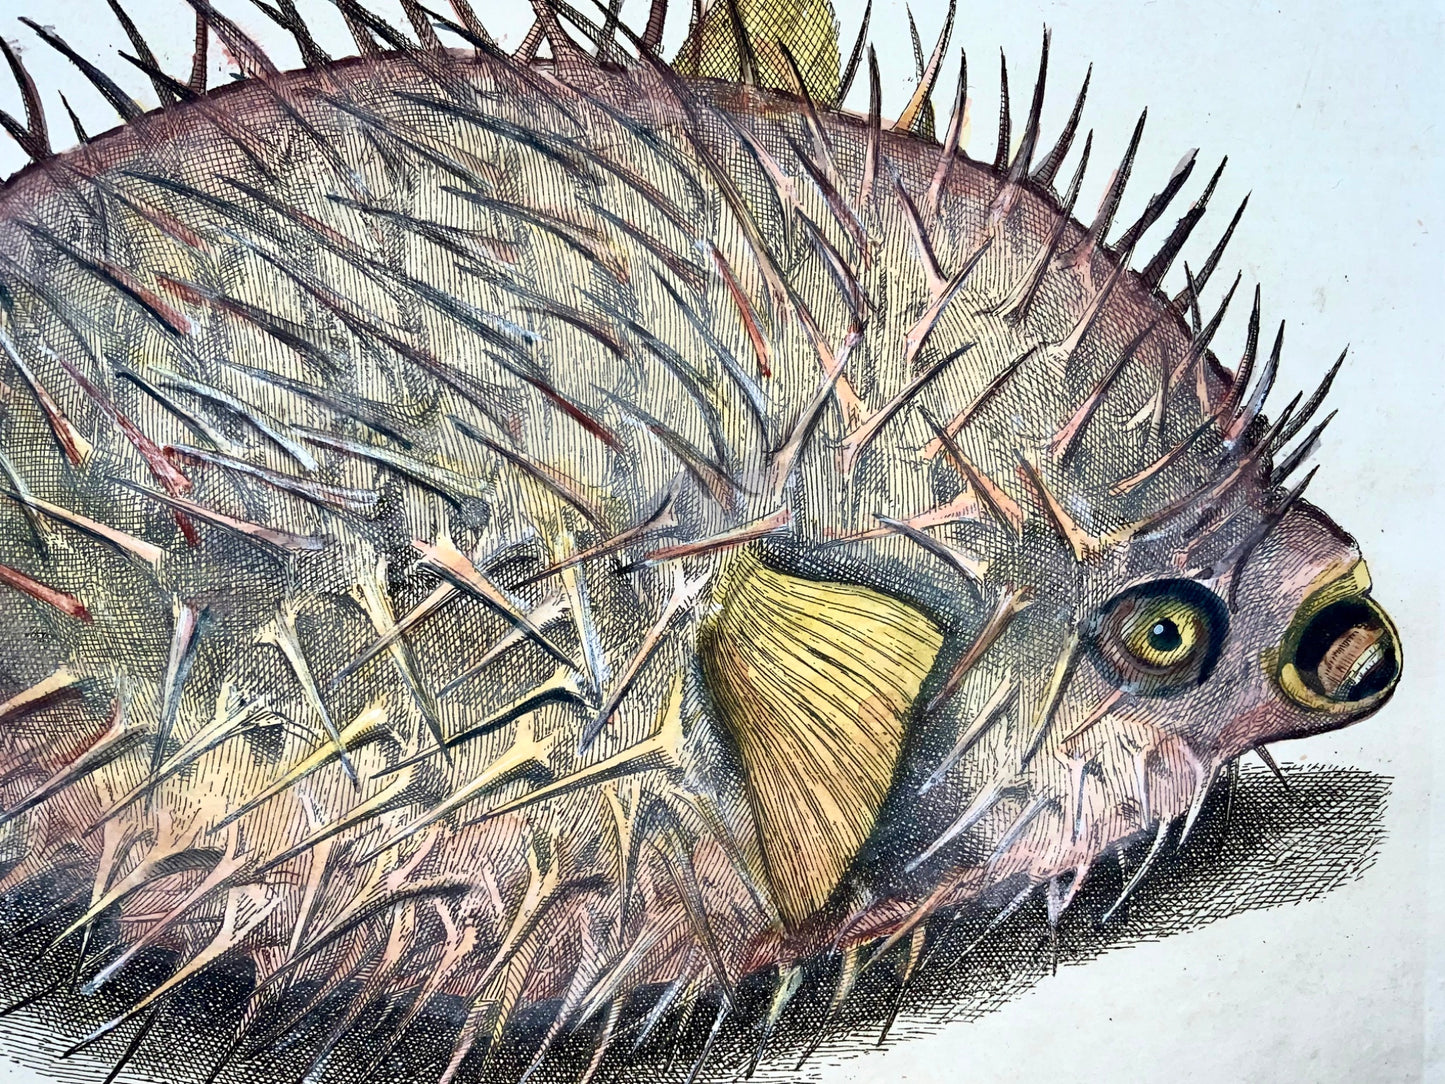 1686 Richard Hunt after Silviani - Porcupine Fish - folio copper engraving